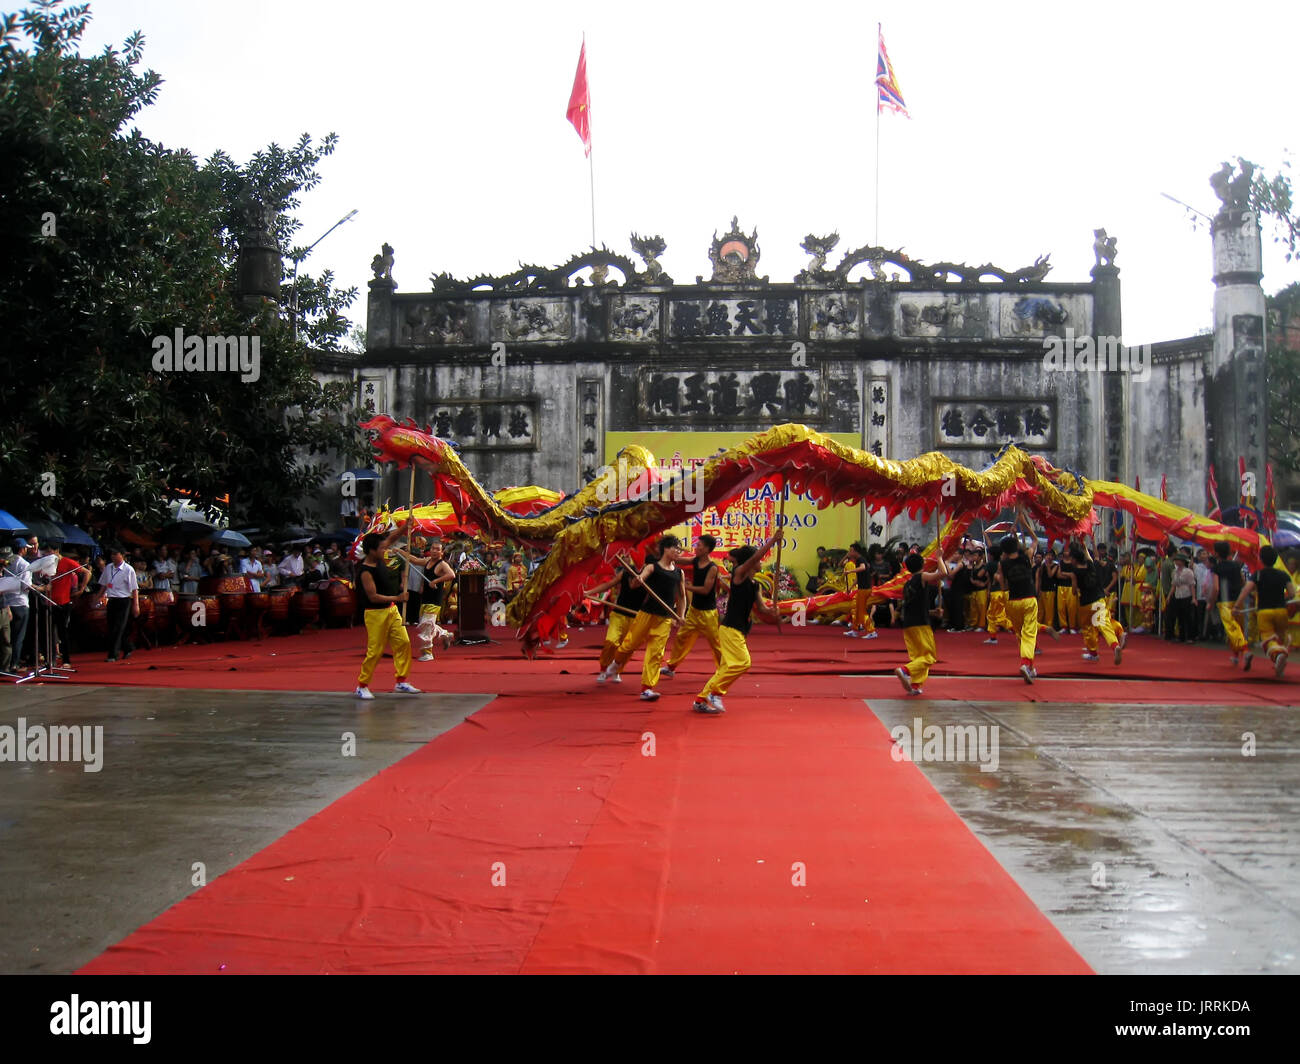 HAI DUONG, VIETNAM, February, 25: Group of people performance dragon dance at Con Son, Kiep Bac festival on February, 25, 2013 in Hai Duong, Vietnam.  Stock Photo